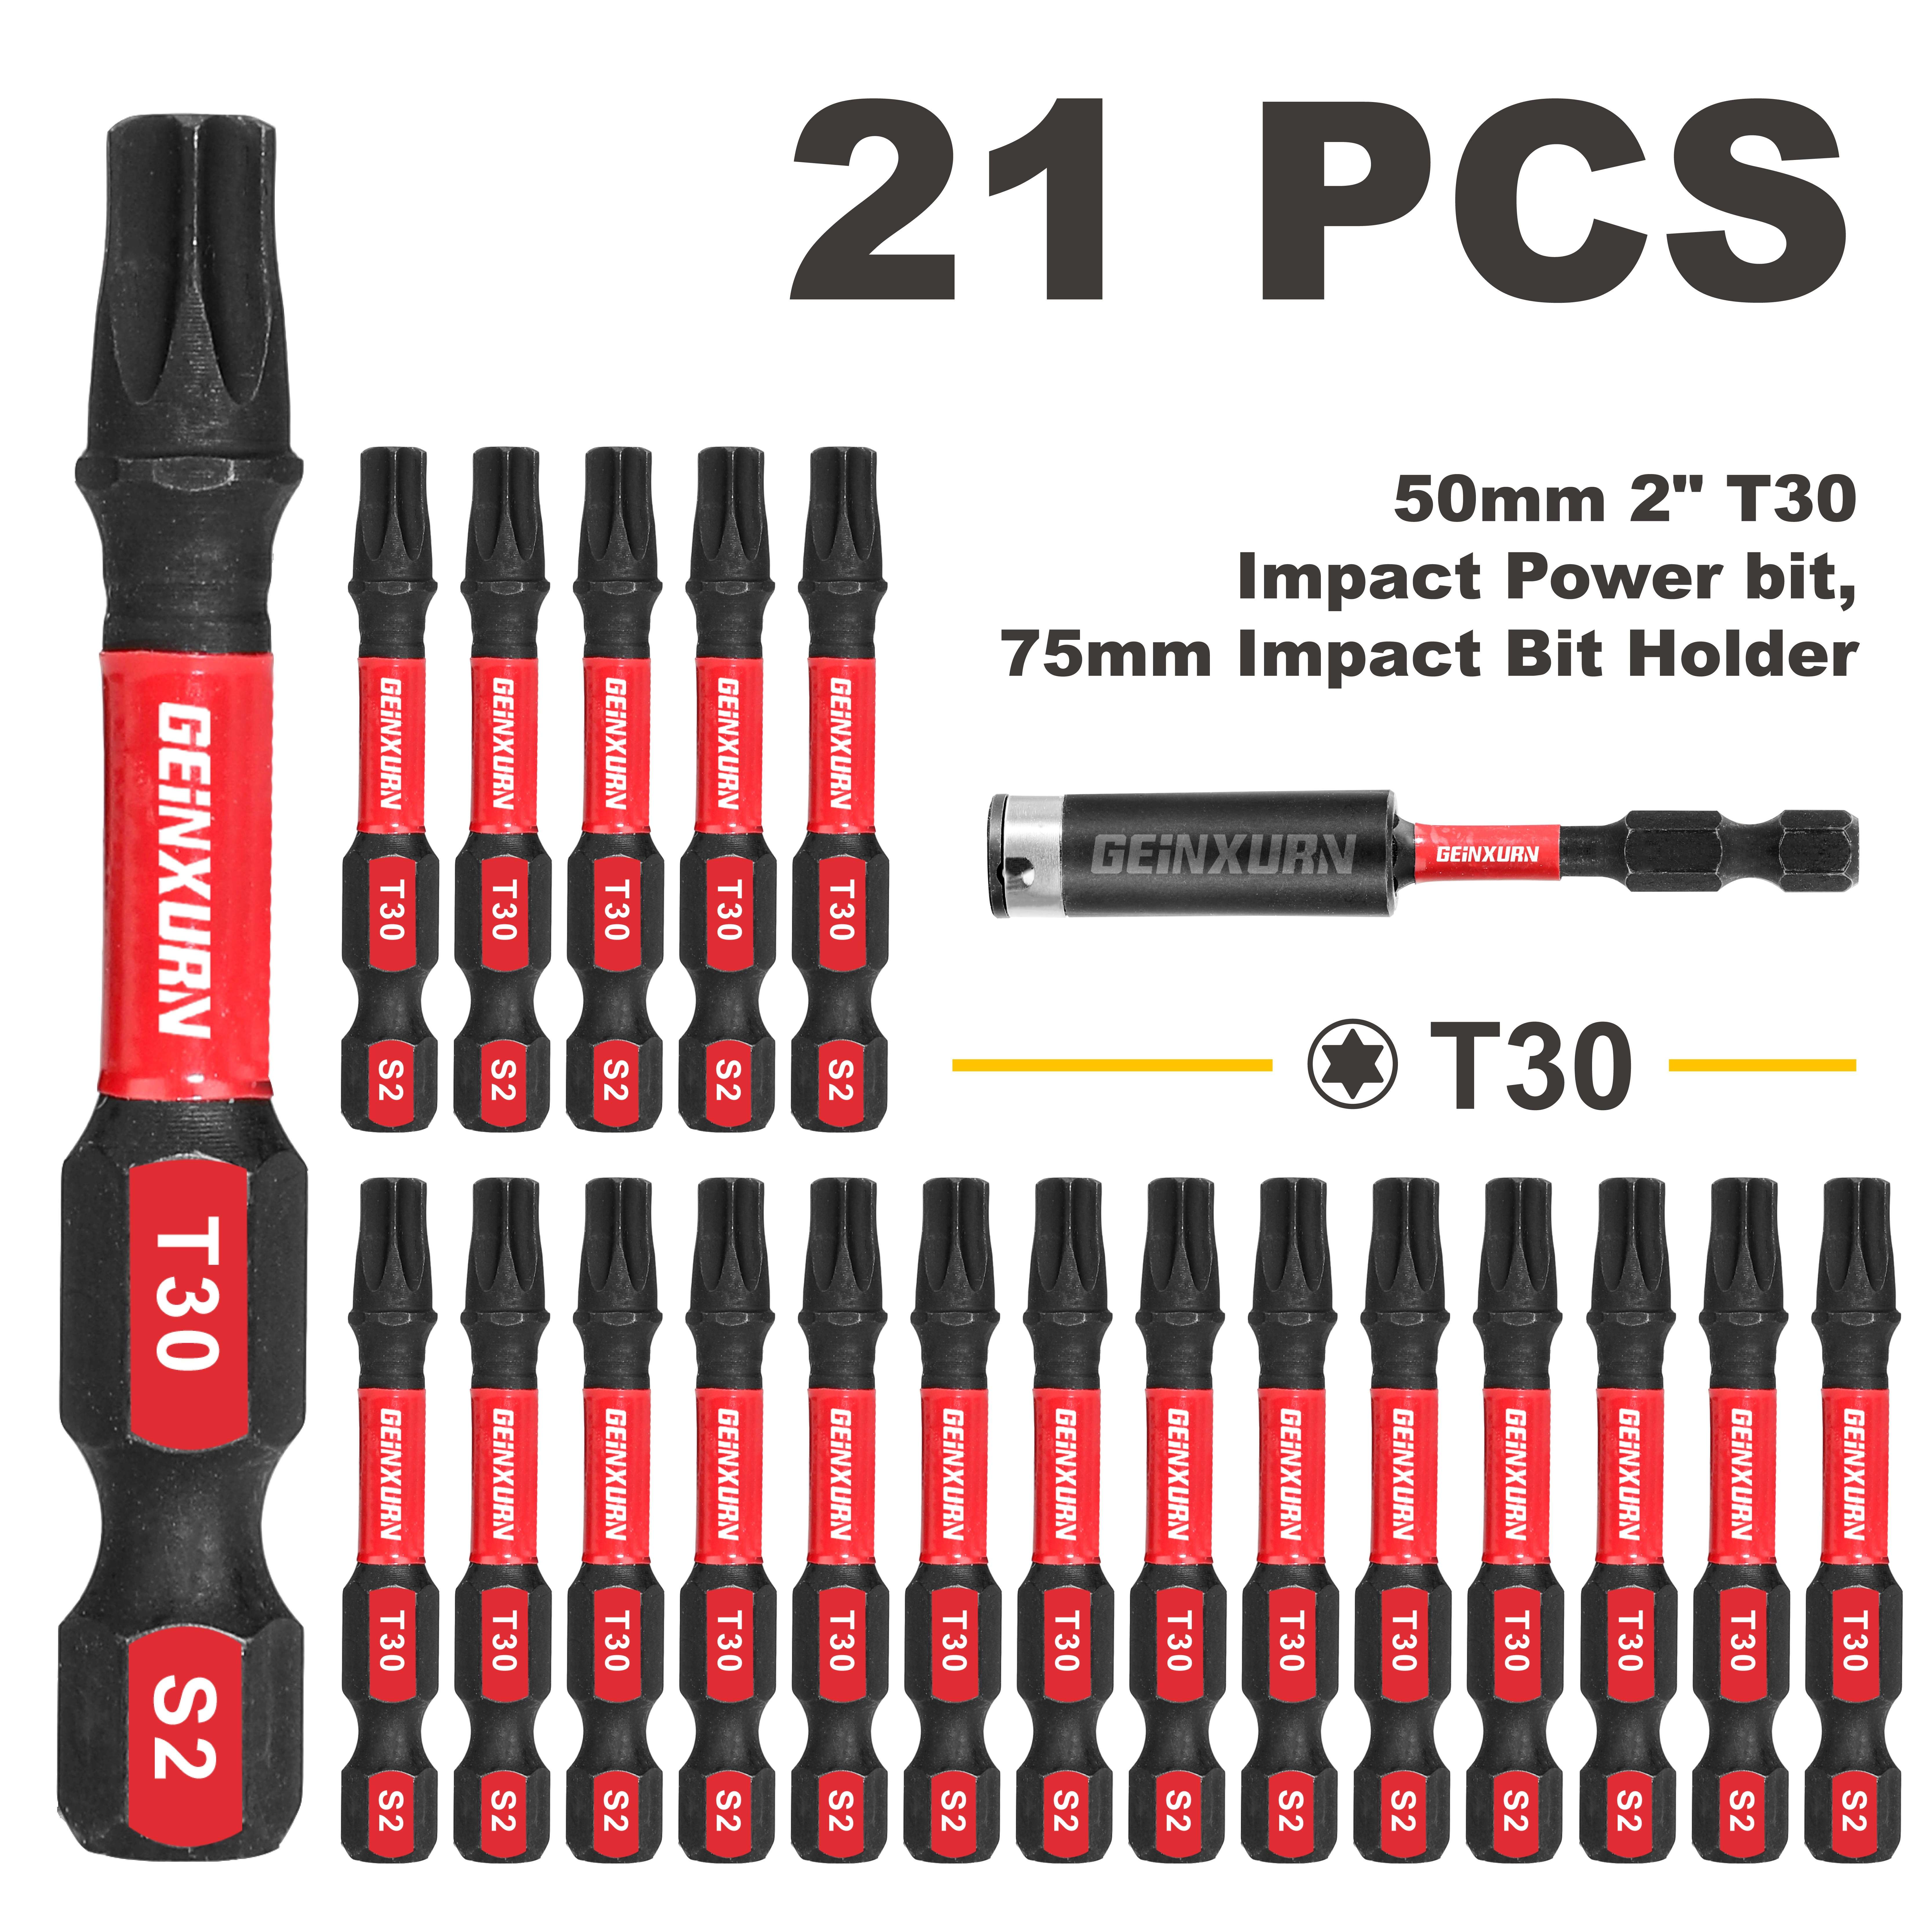 

50mm 2 Inch Torx T30 Impact Screw Bits, 75mm Impact Connecting Rod Set Sleeve